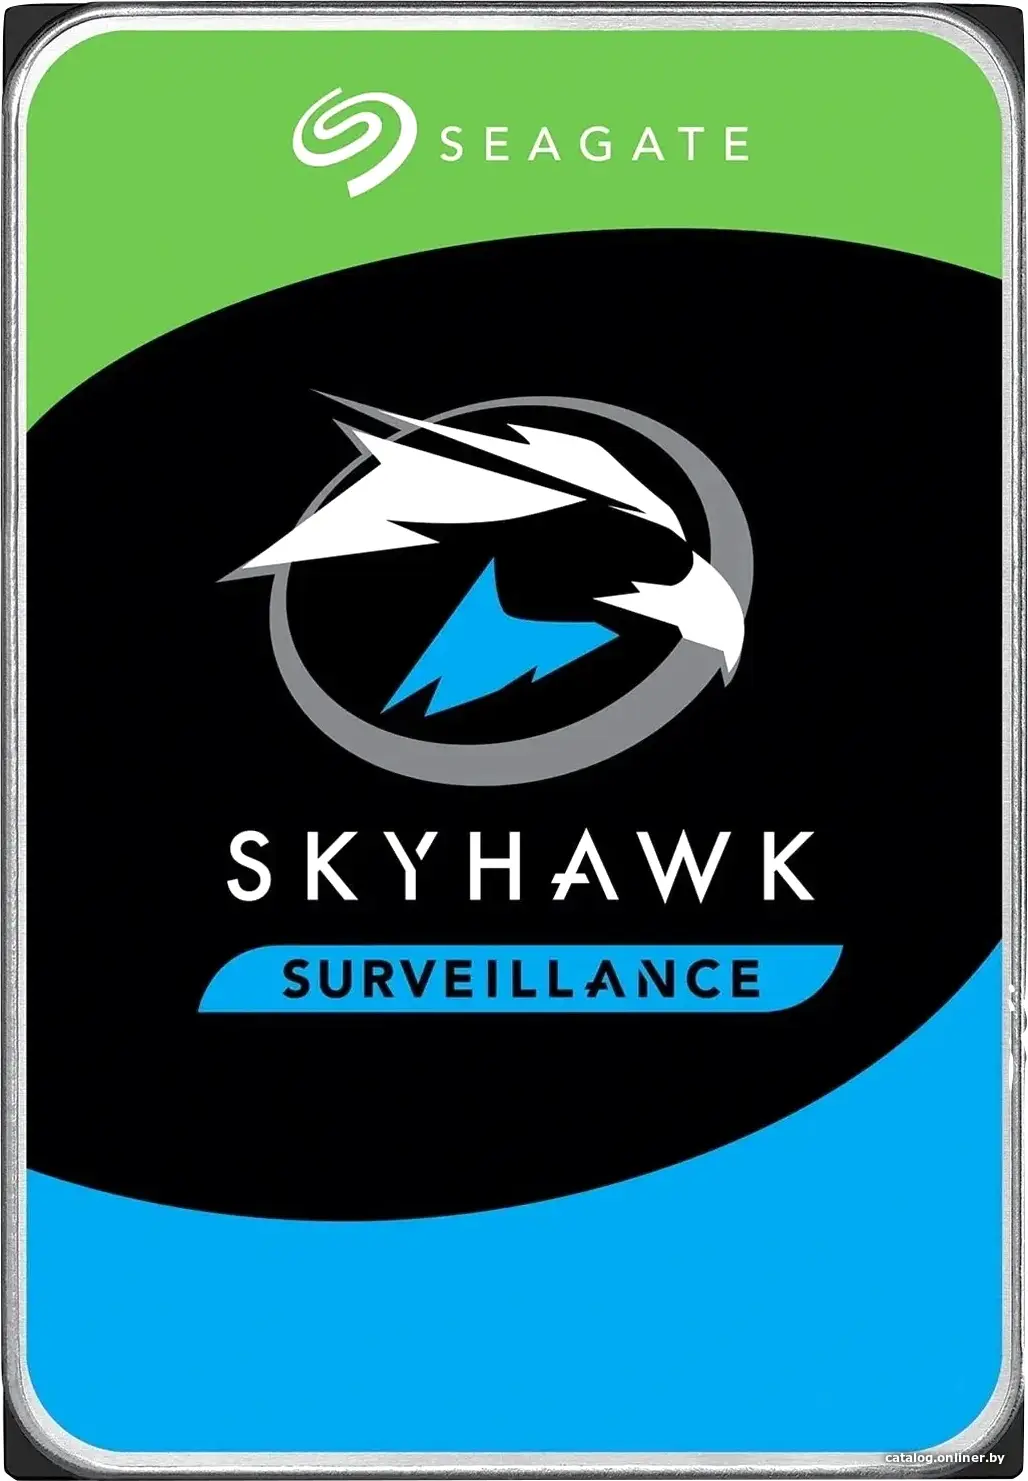 Купить Жесткий диск Seagate SATA-III 1TB ST1000VX013 Video Skyhawk (5400rpm) 256Mb 3.5'', цена, опт и розница